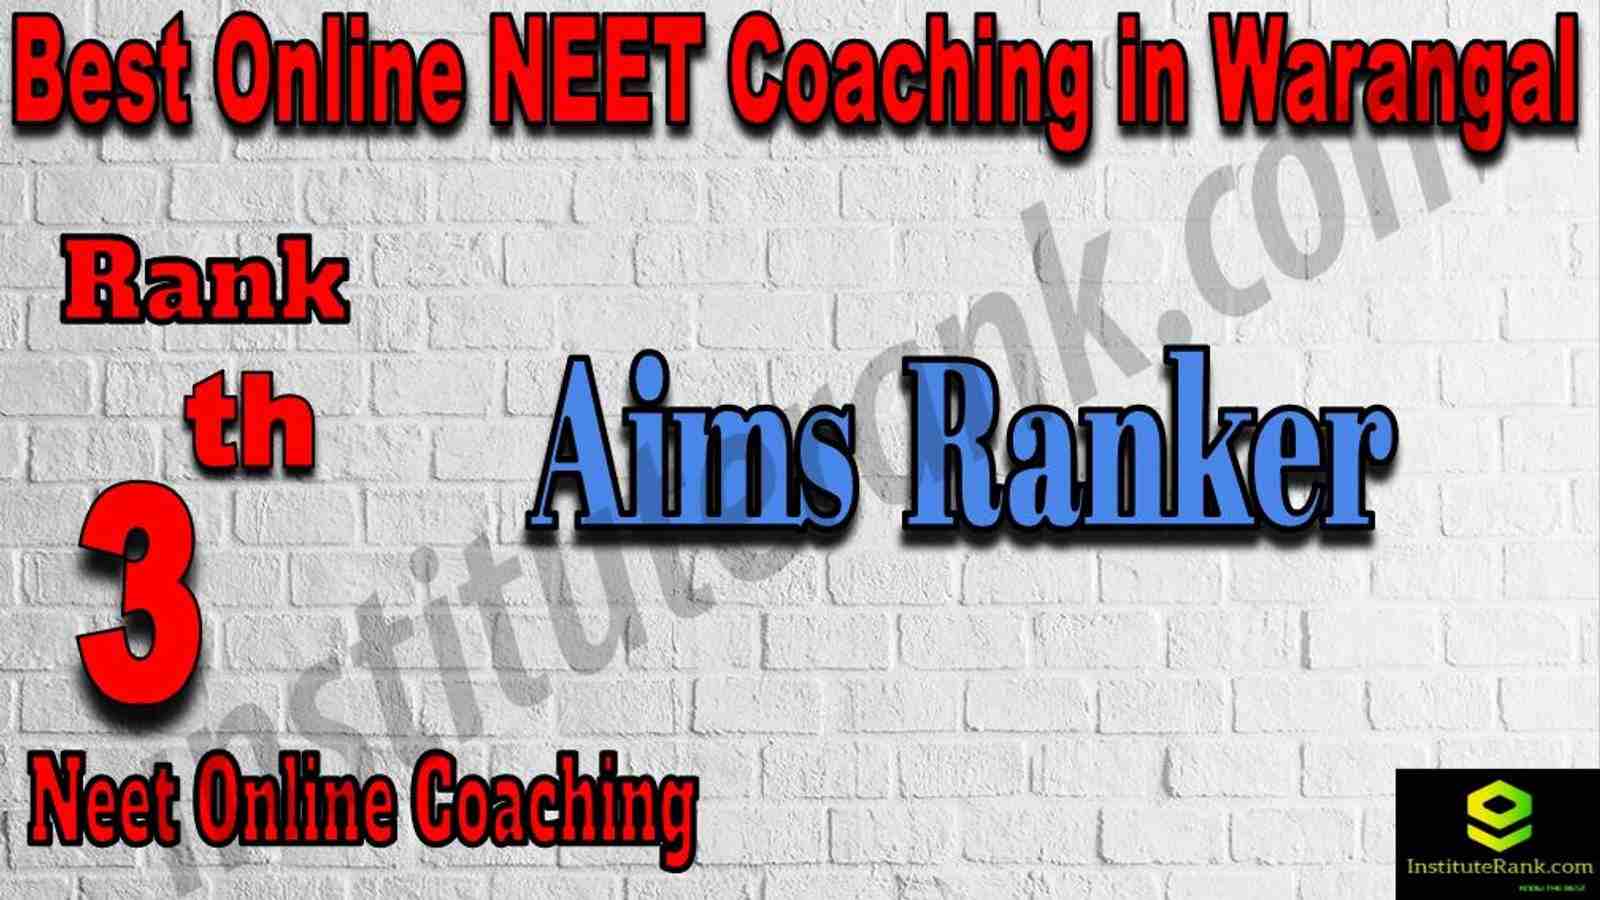 3rd Best Online Neet Coaching in Warangal